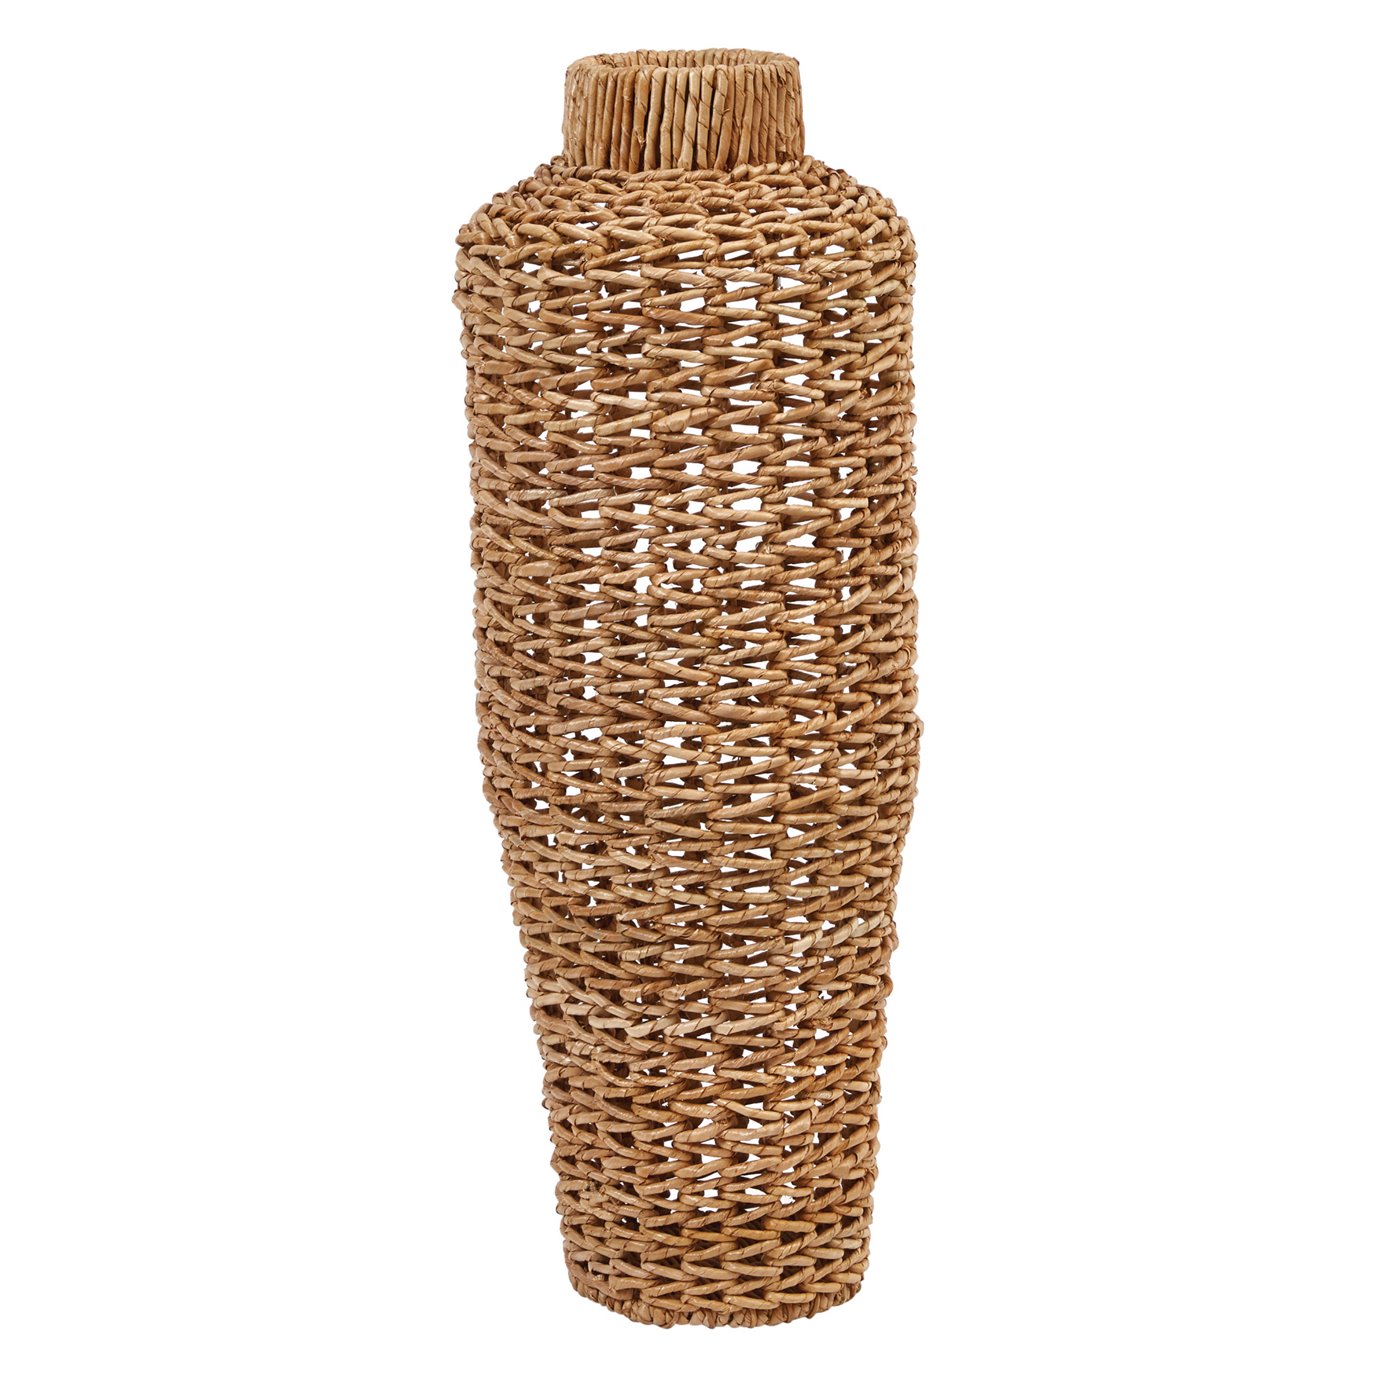 30"H Handwoven Water Hyacinth & Rattan Floor Vase